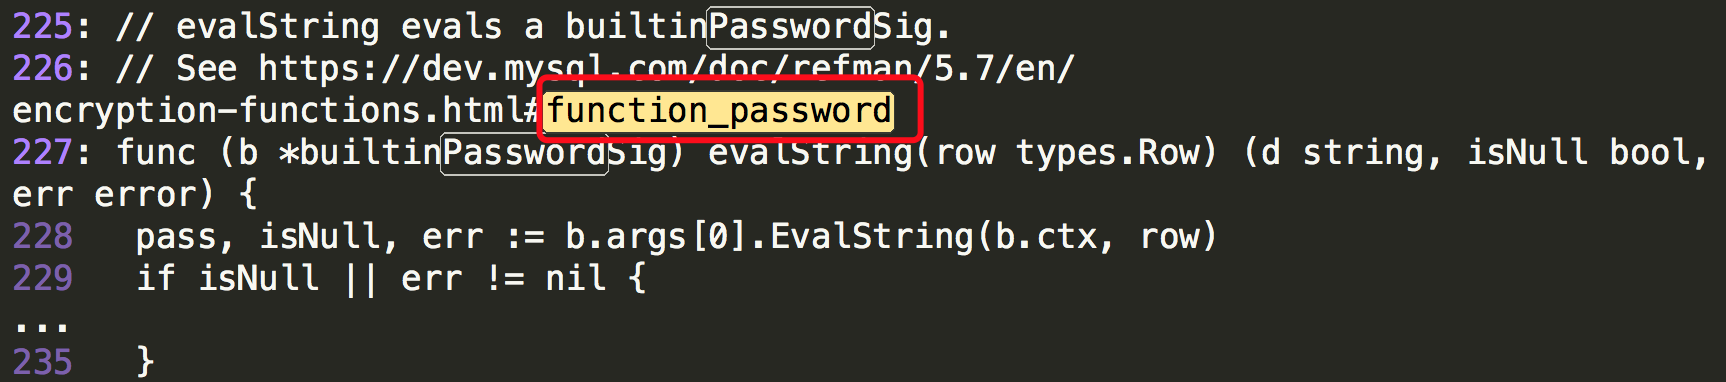 tidb_pr#6000_code_search_function_password